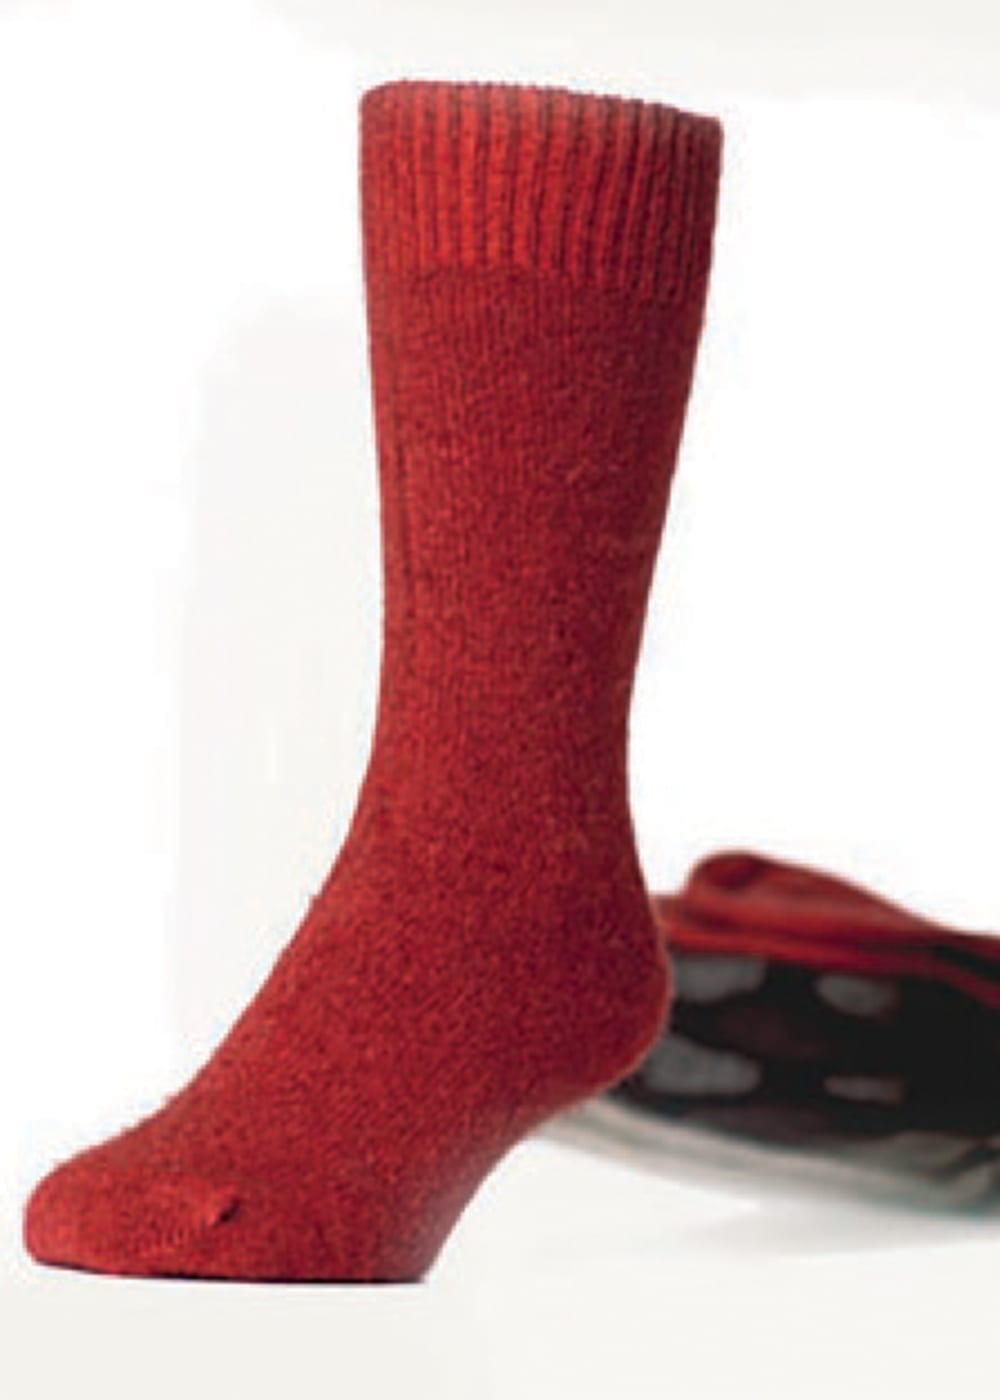 KO70 Dress wool socks in red